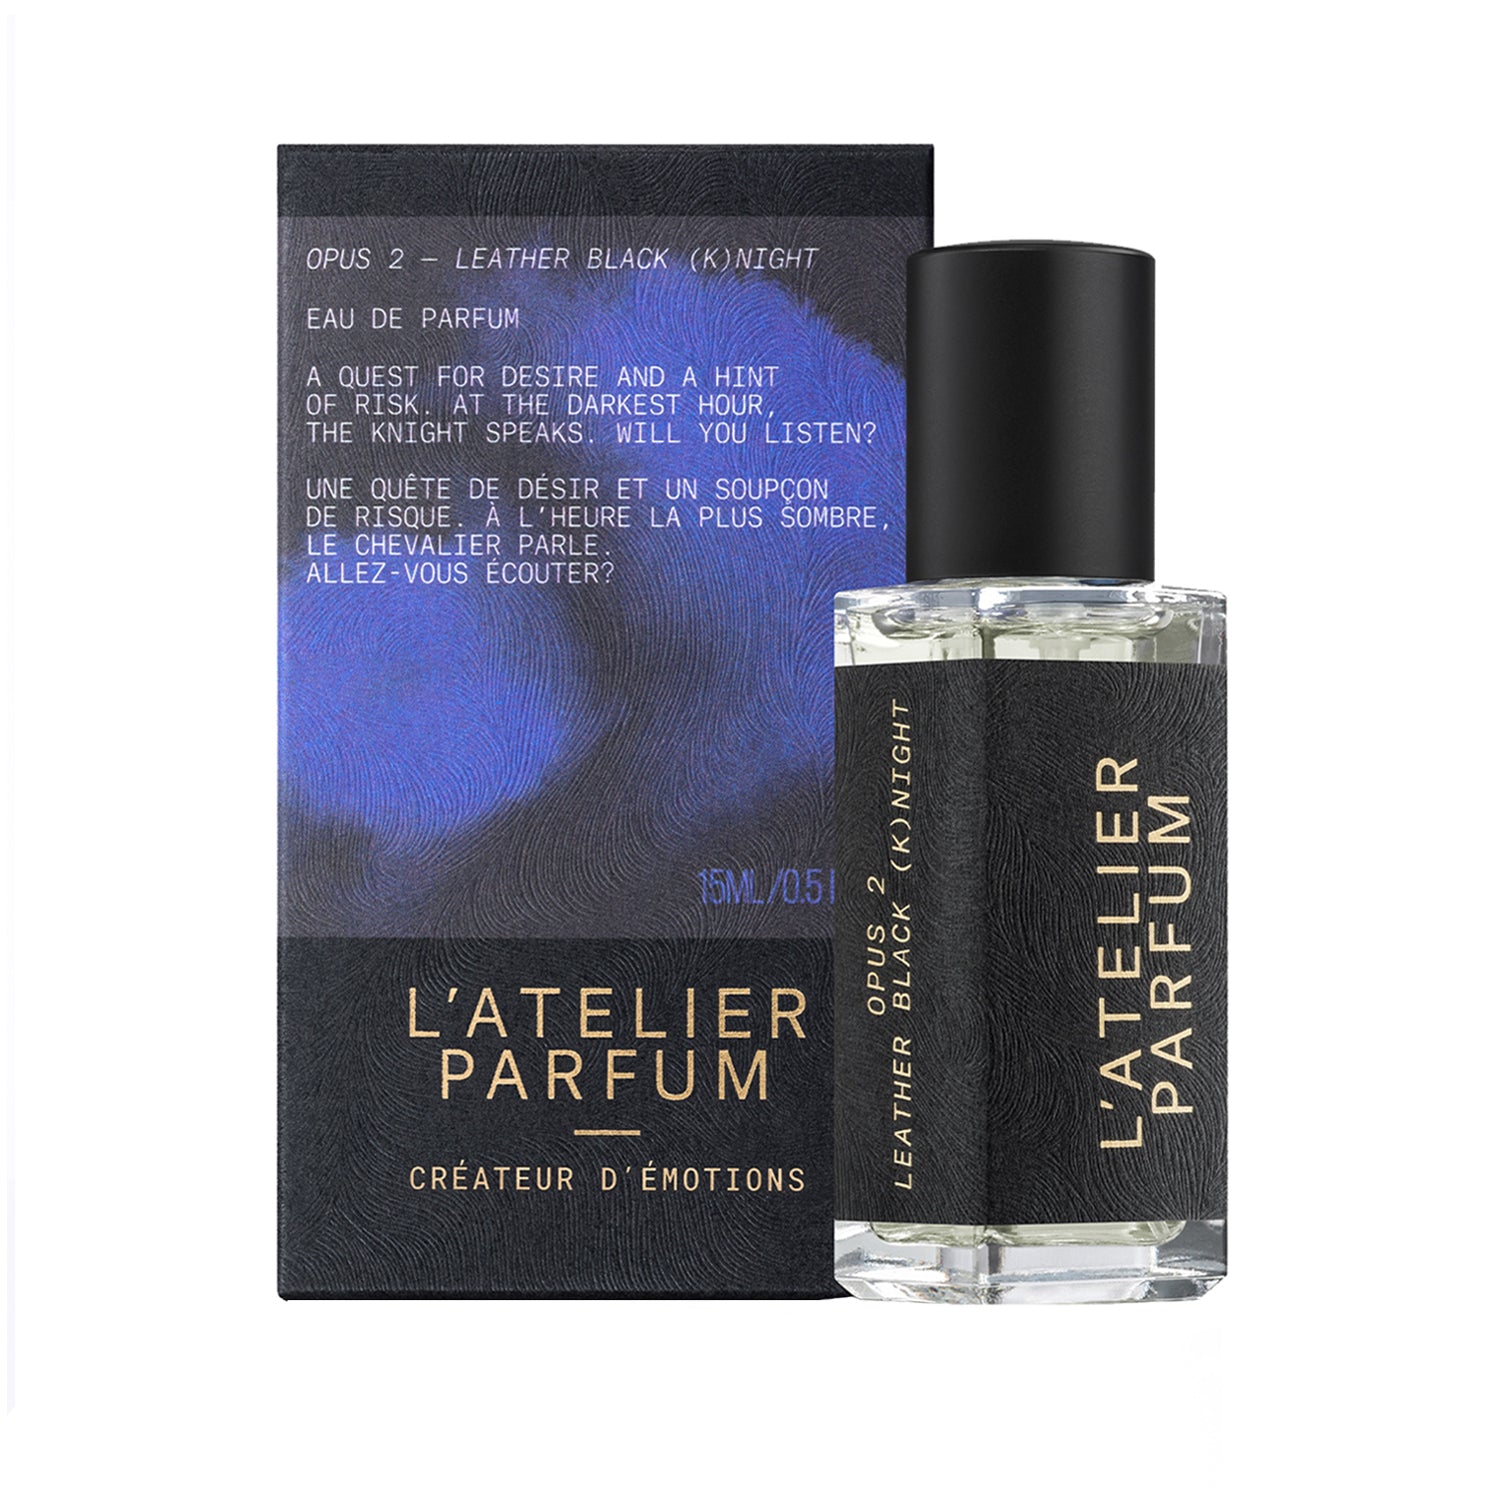 LEATHER BLACK (K)NIGHT - 15ml – L'Atelier Parfum